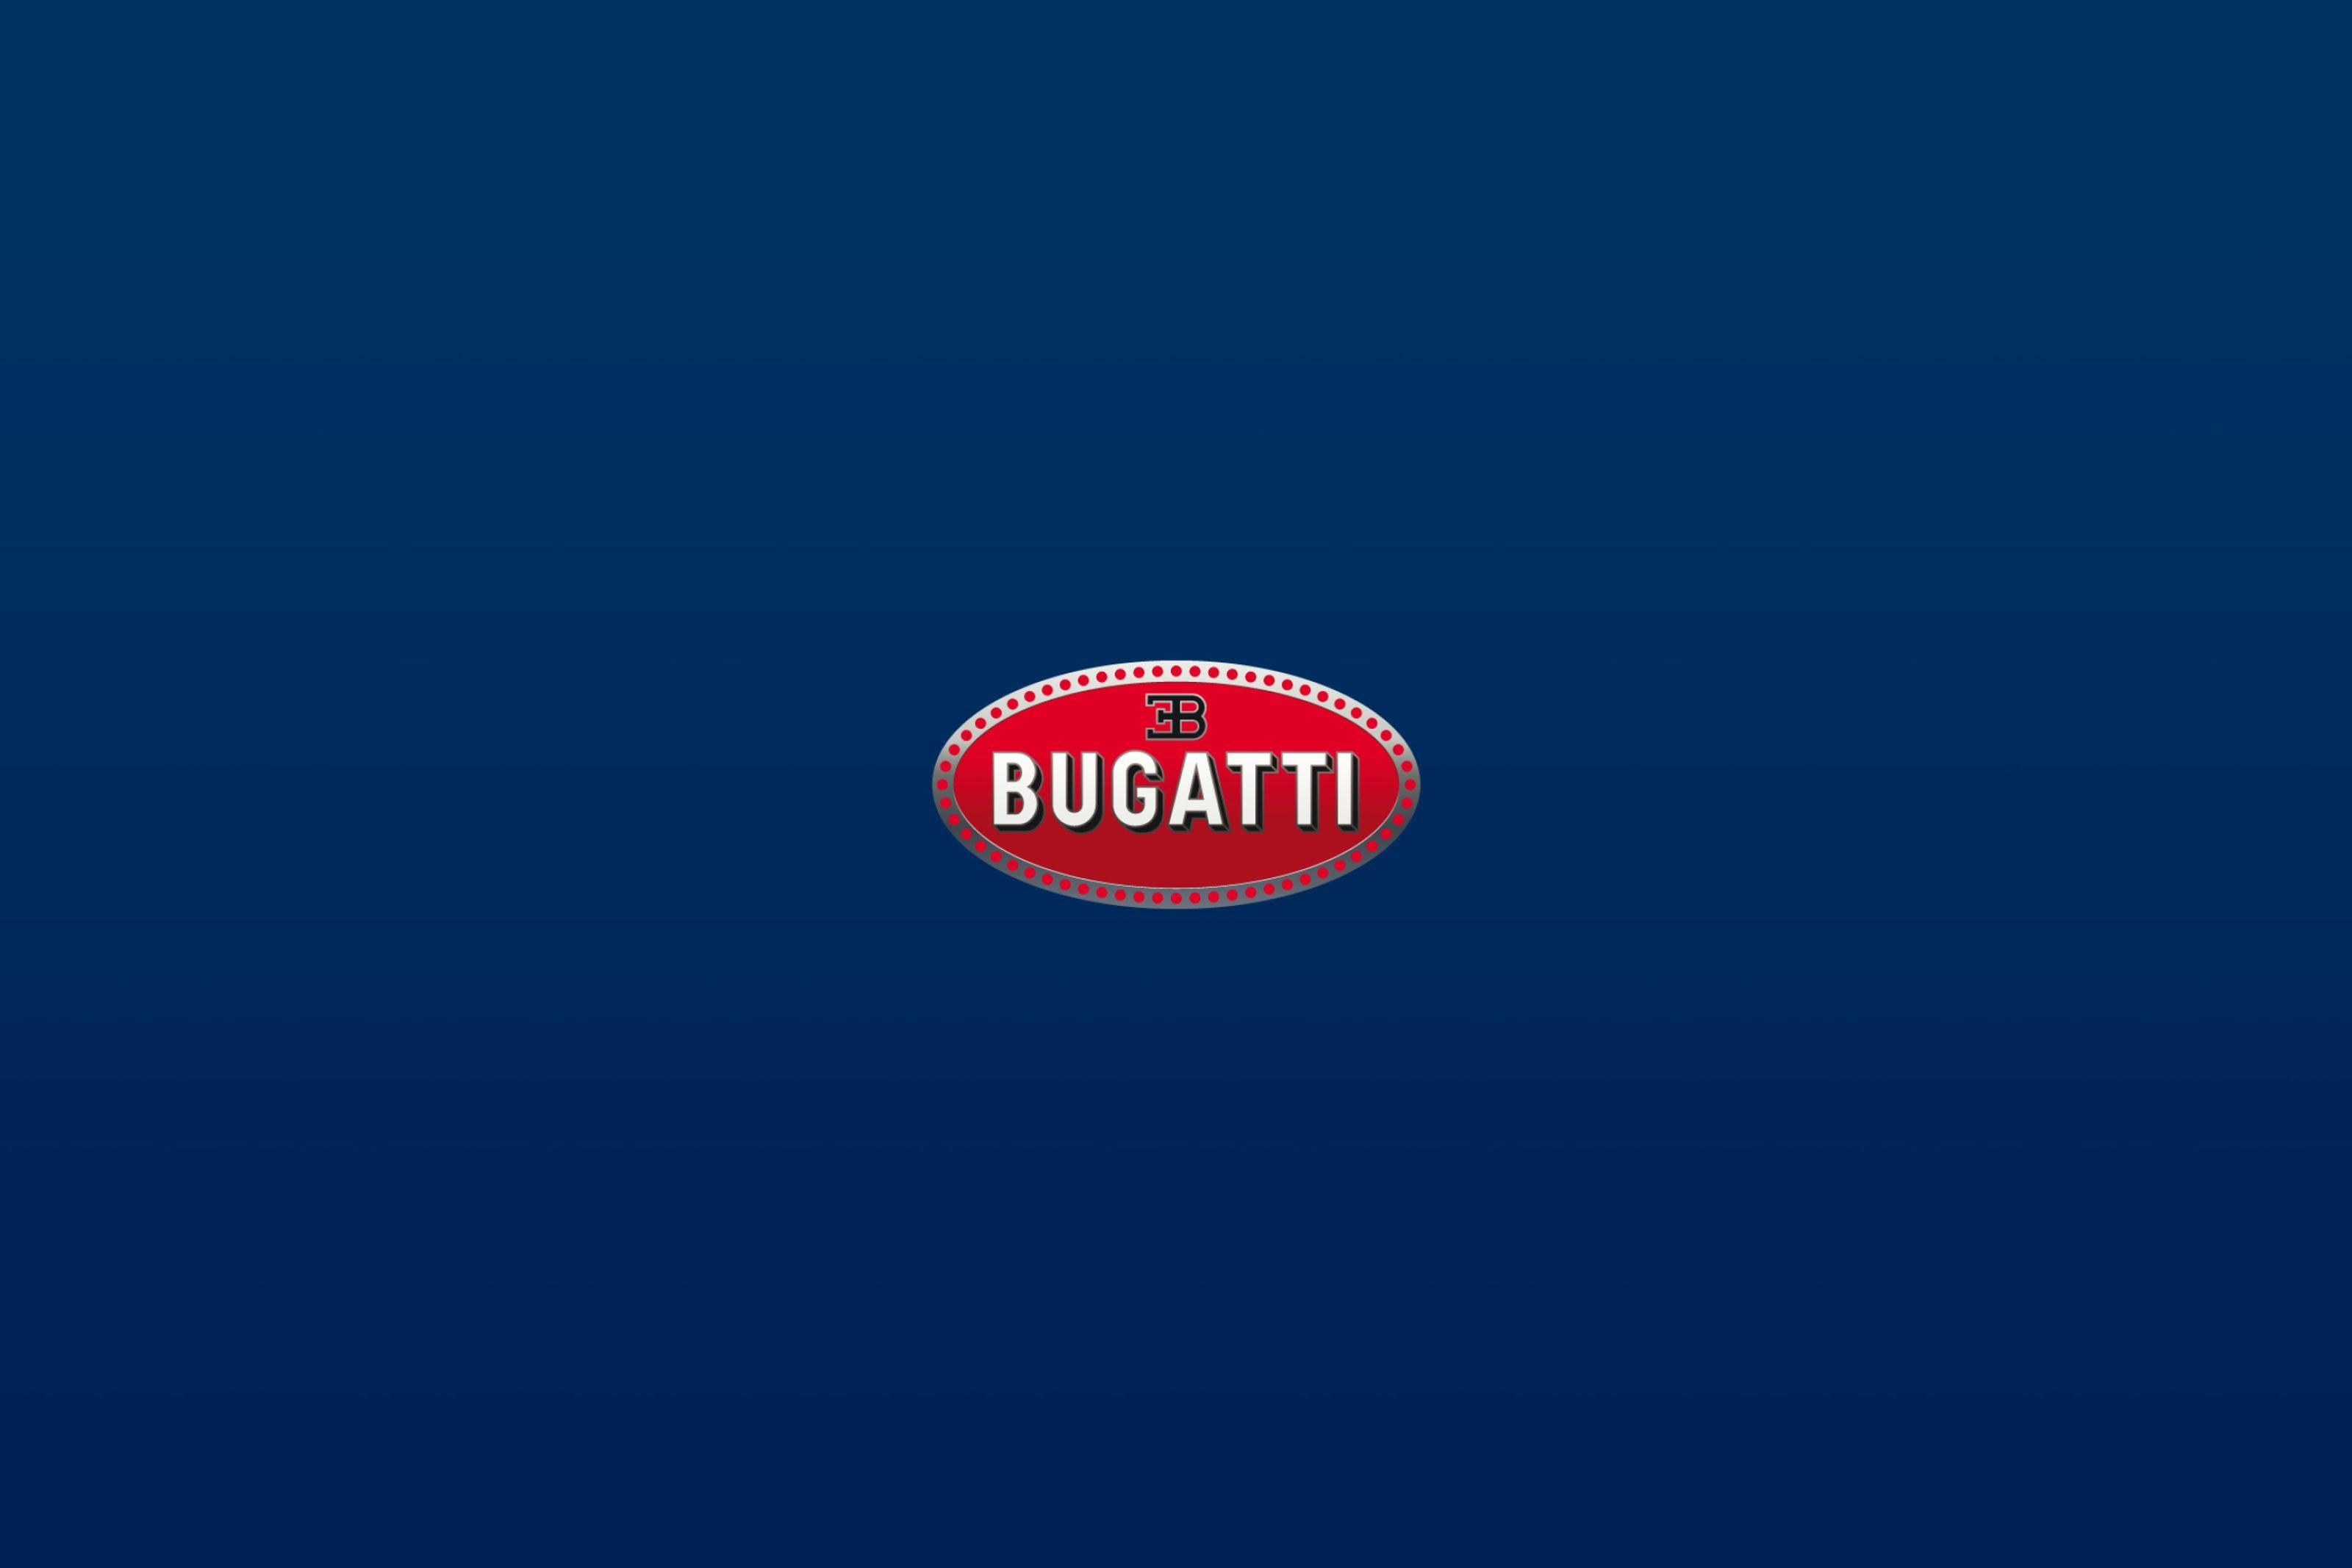 Salon Rétromobile: Bugatti feiert den 80. Geburtstag des Type 59 Grand Prix